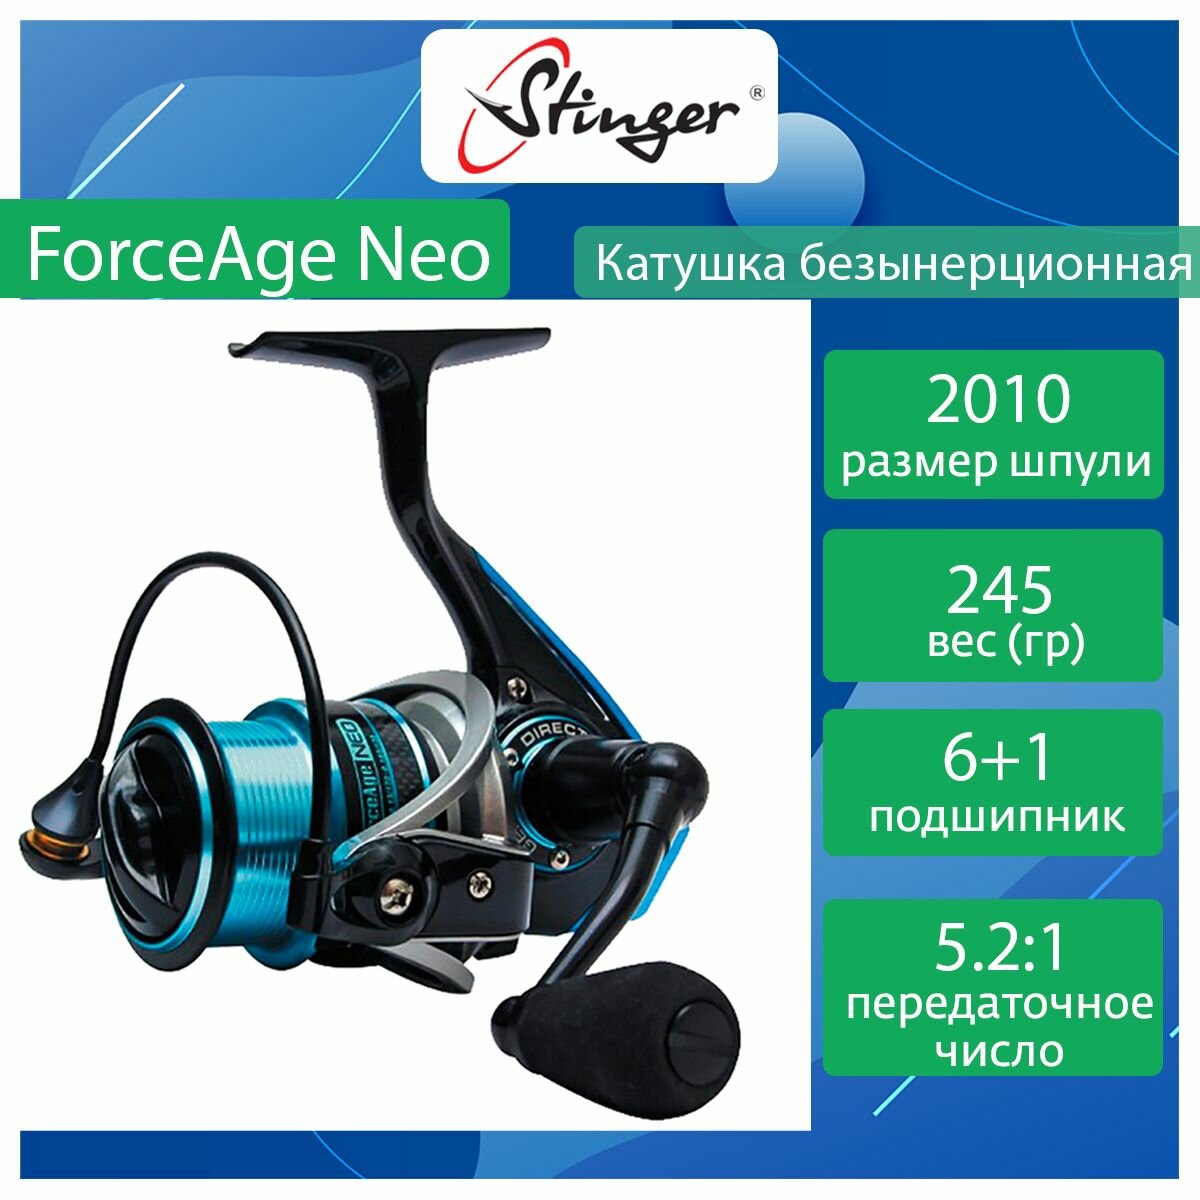 Катушка для рыбалки безынерционная Stinger ForceAge Neo 2010